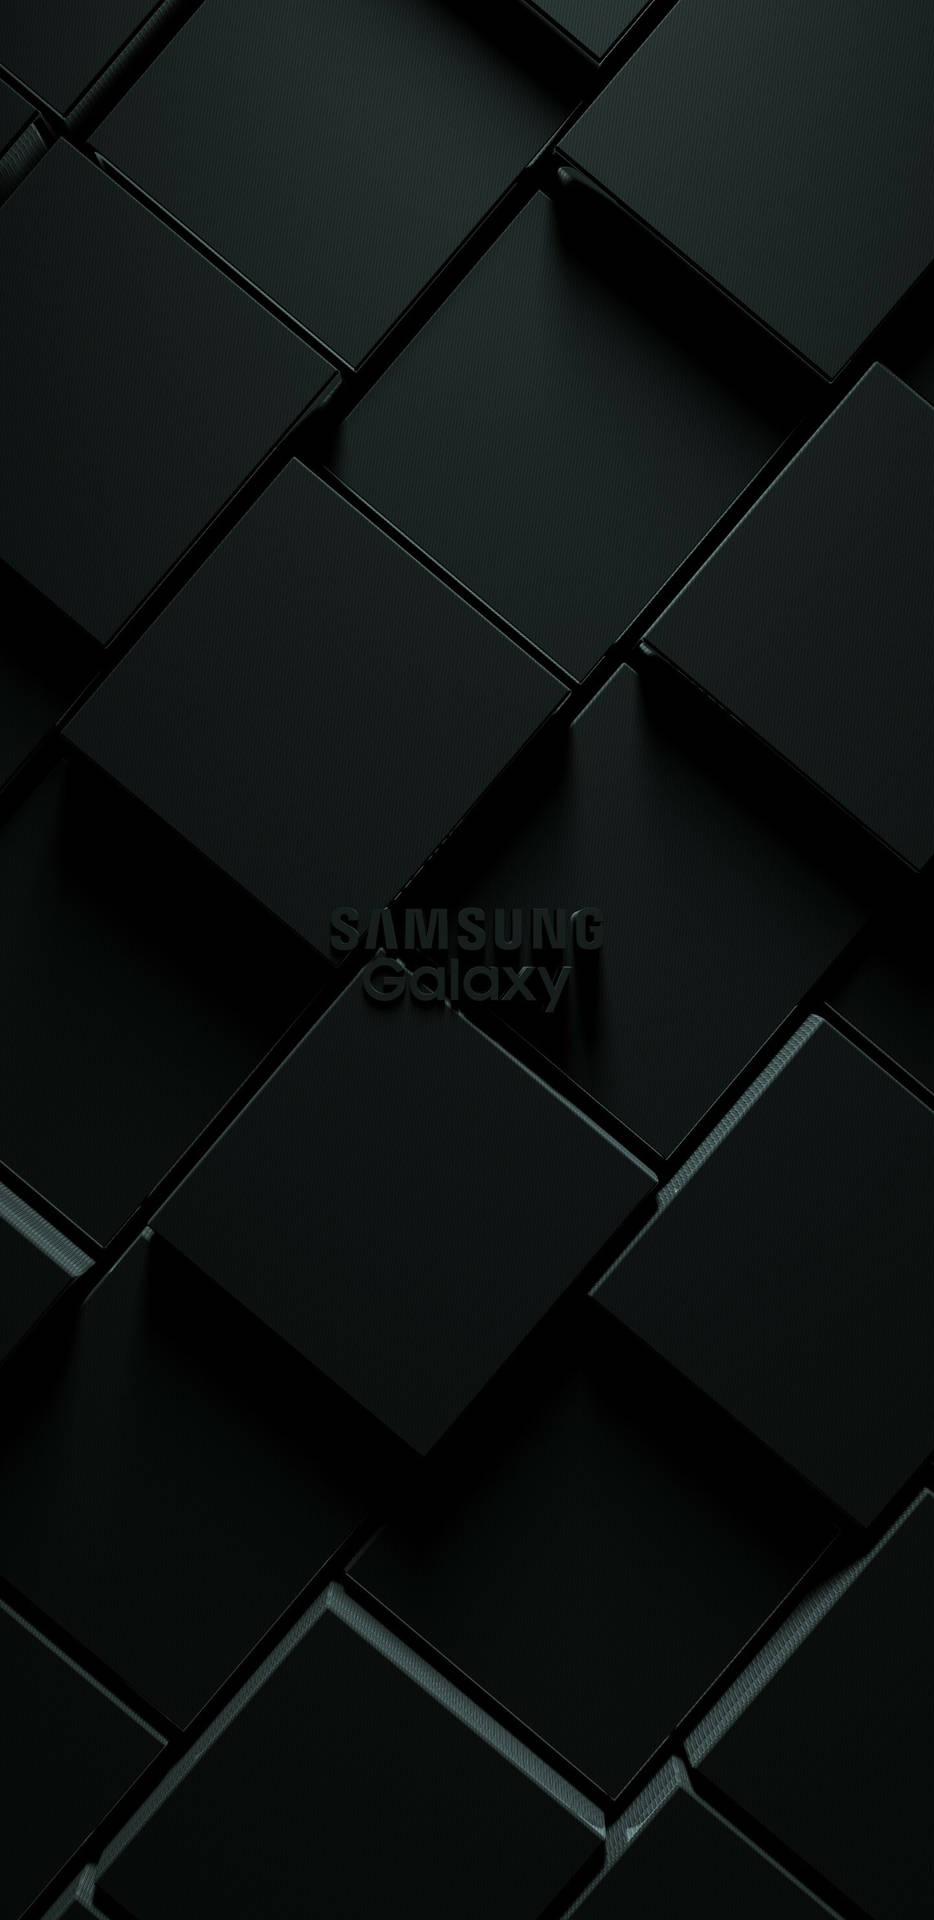 Samsung Galaxy 3d Dark Aesthetic Cubes